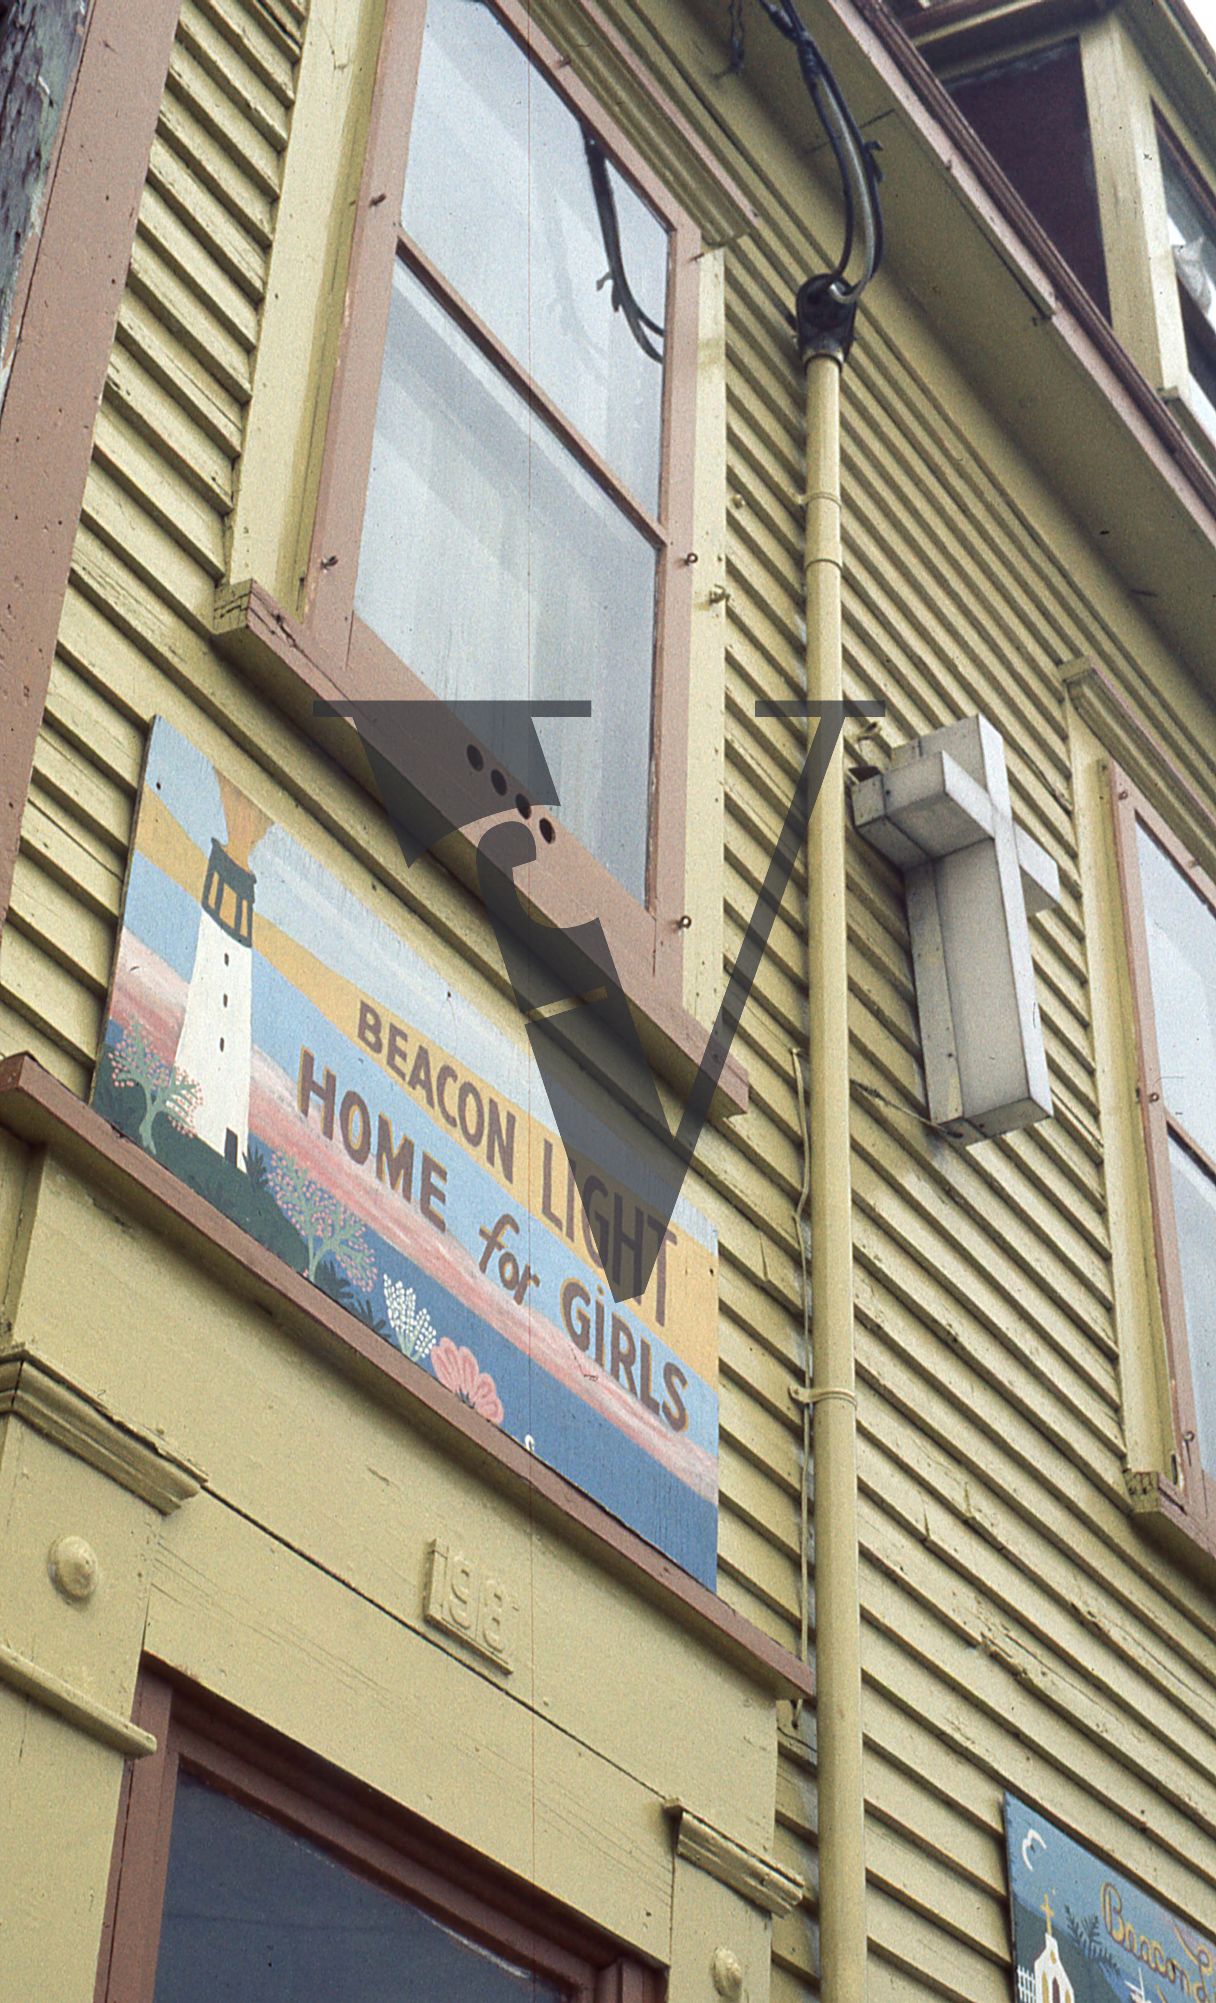 Newfoundland, St. Johns, capital city, signage, Beacon Light Home For Girls.